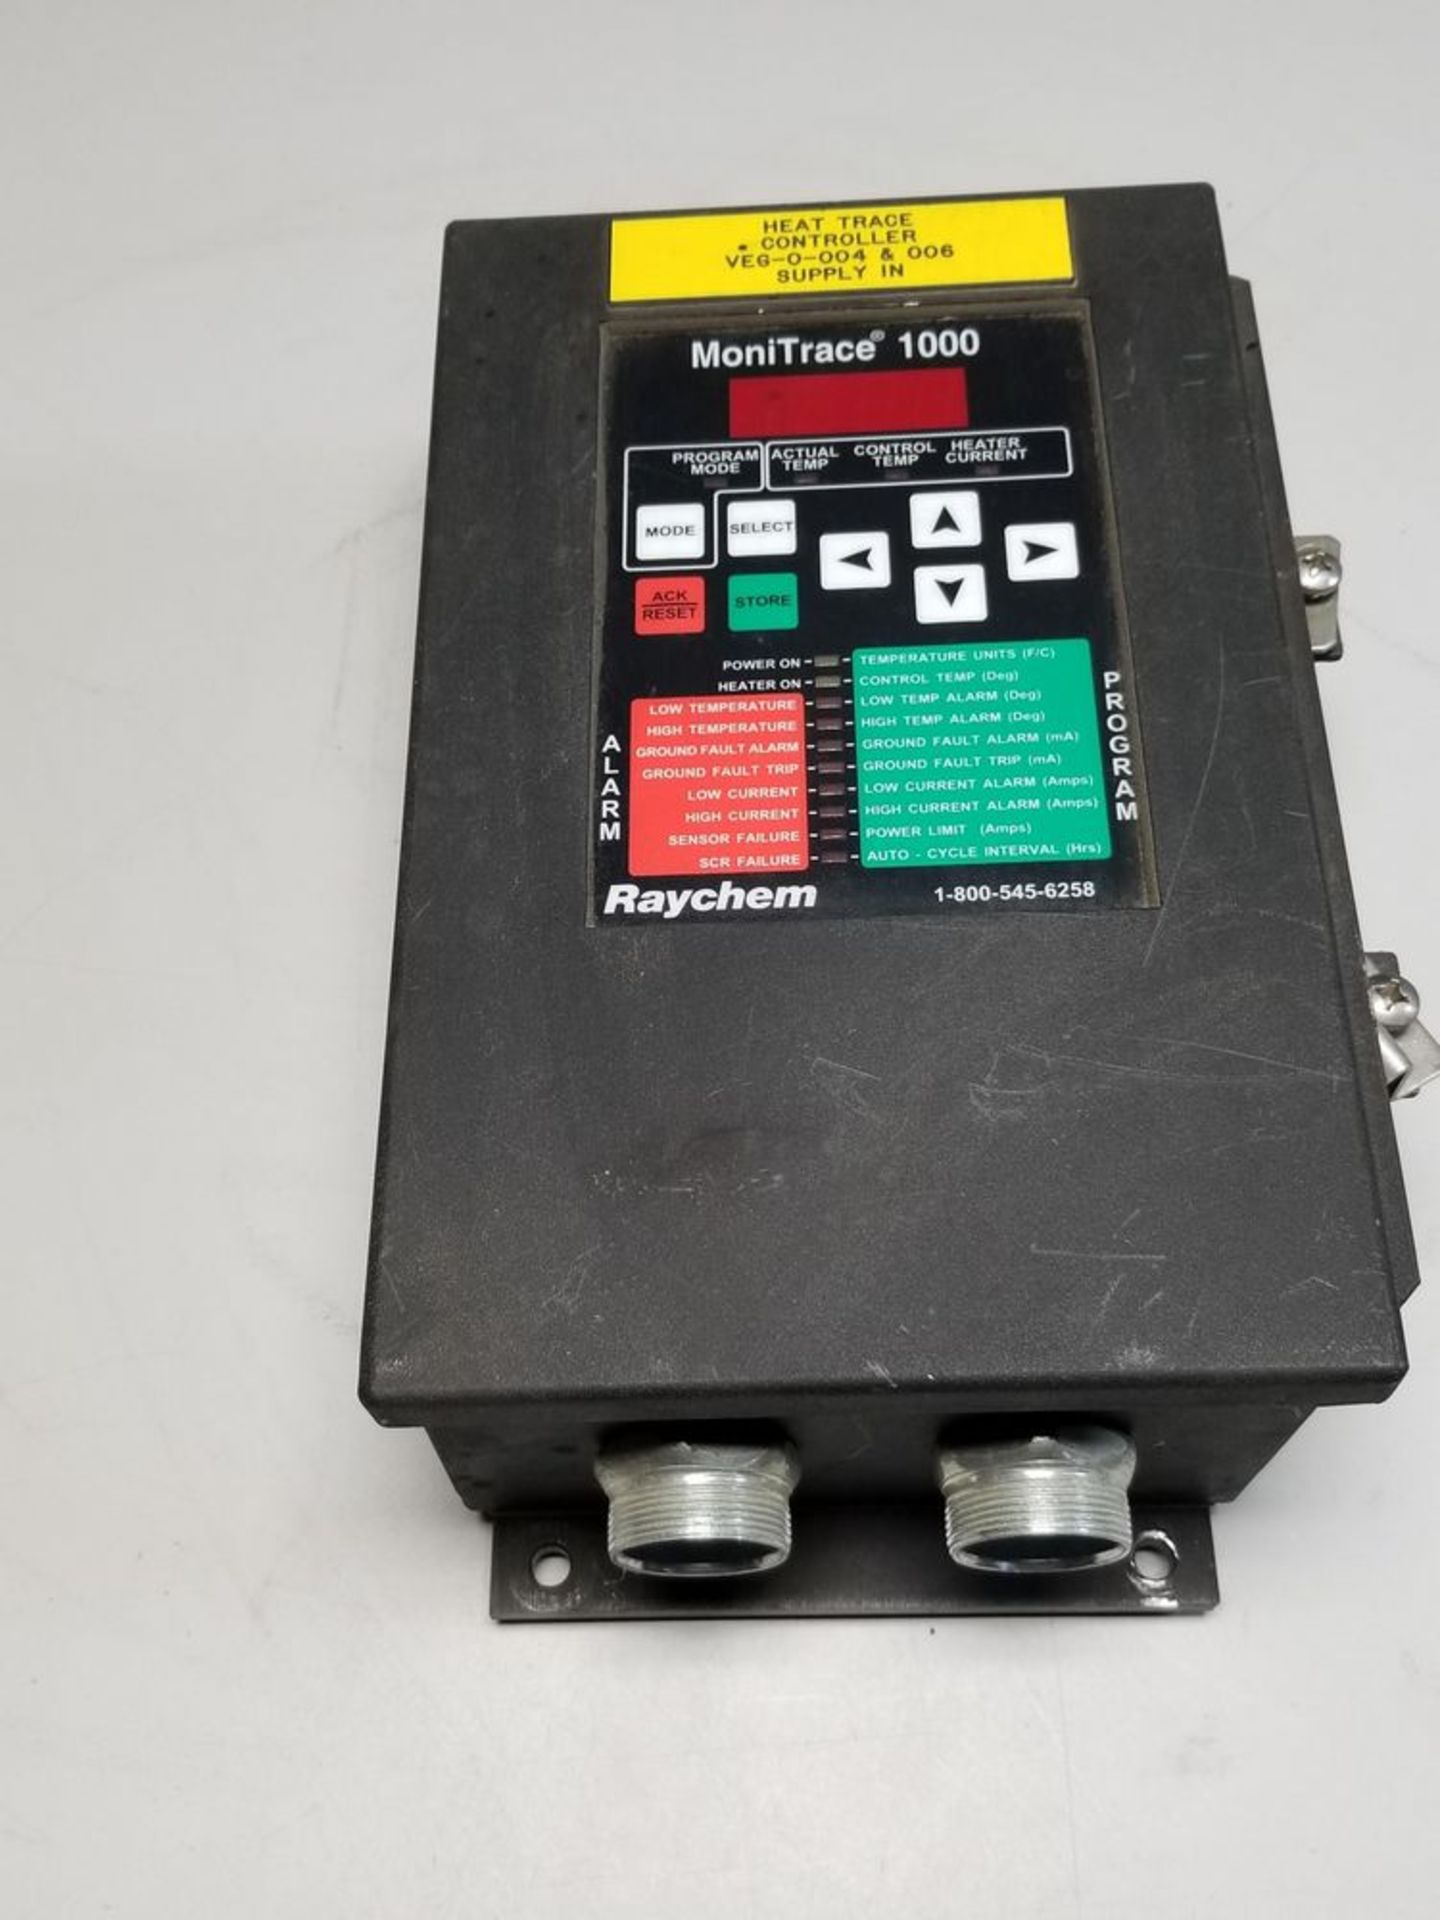 Raychem Heat Tracing Controller Operator Interface